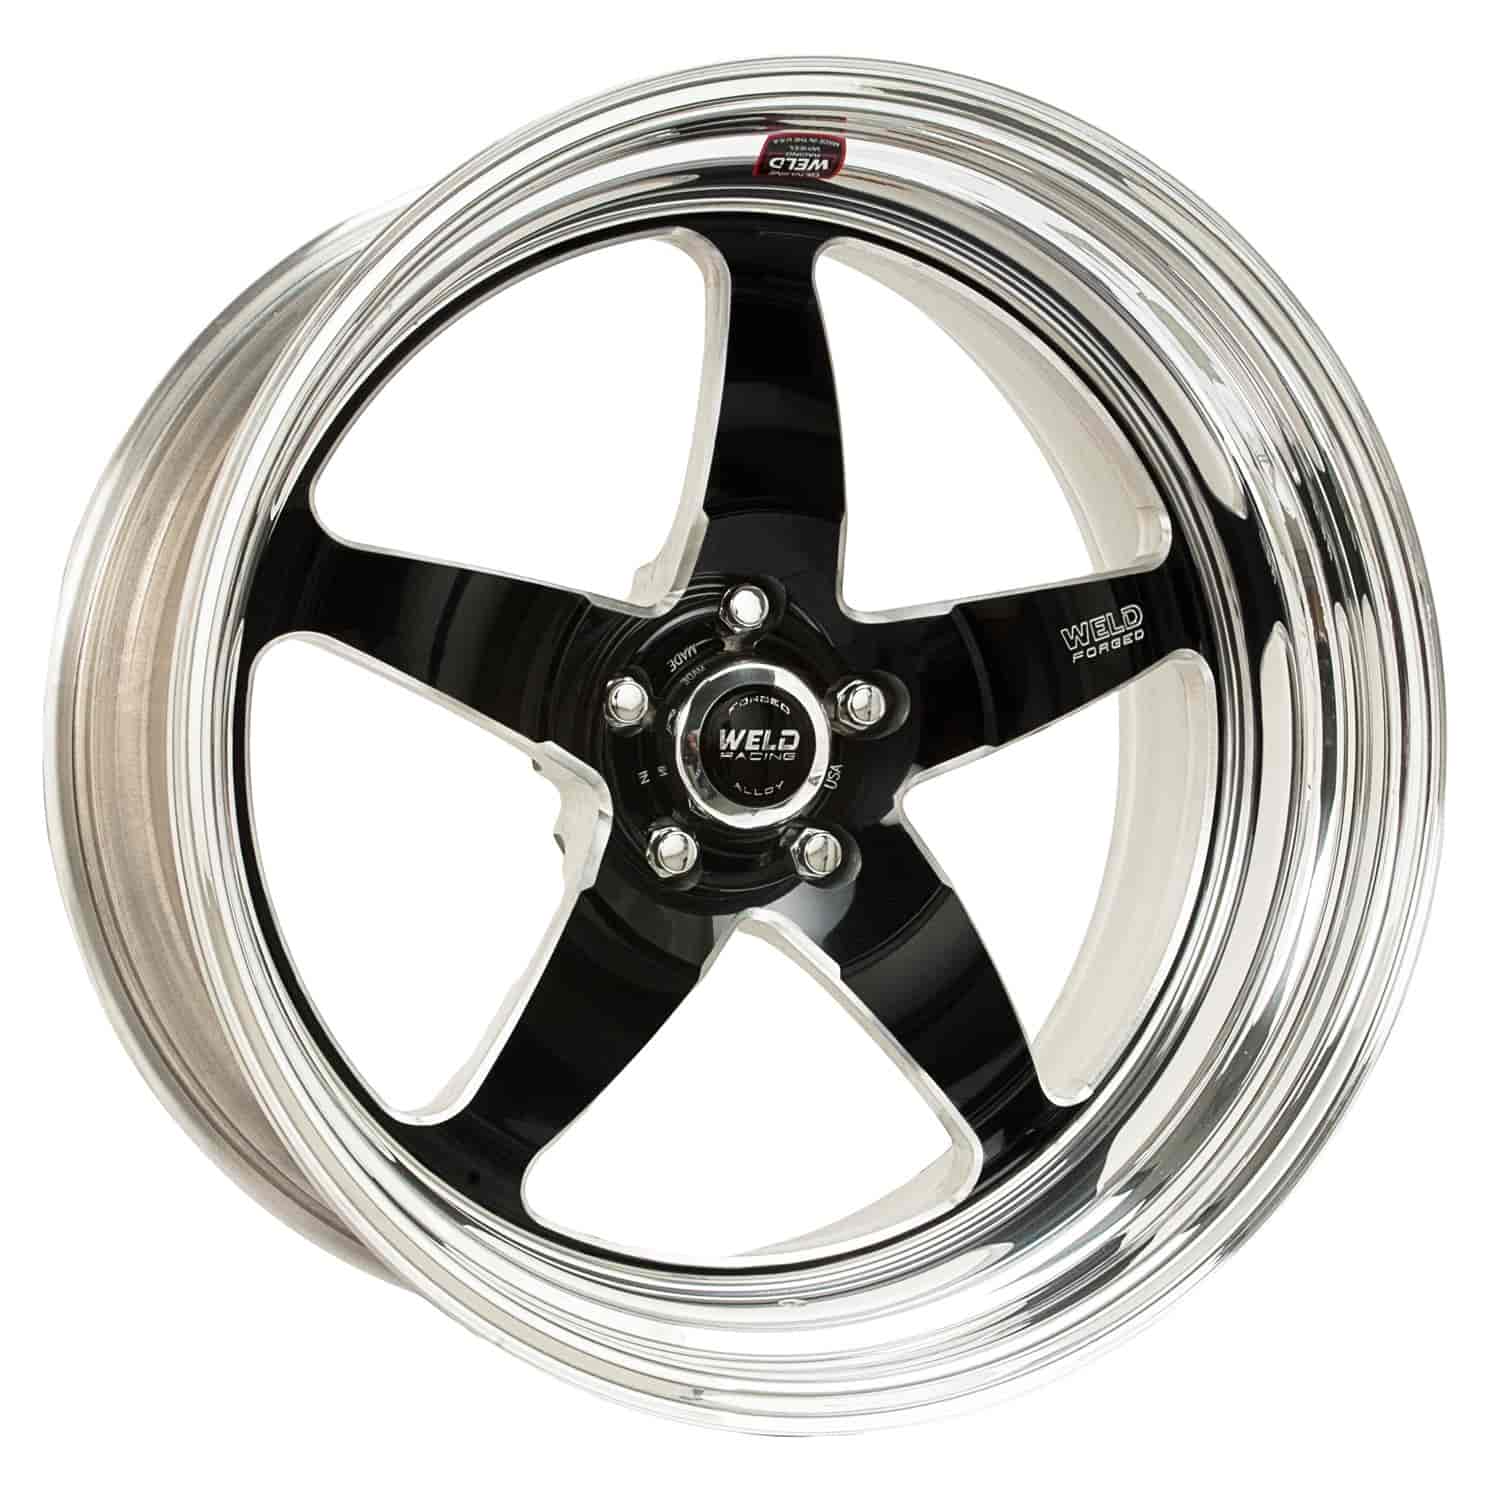 RT-S Series Wheel Size: 17" x 5" Bolt Circle: 5 x 115mm Rear Spacing: 2.20" Black Offset: -37.59mm